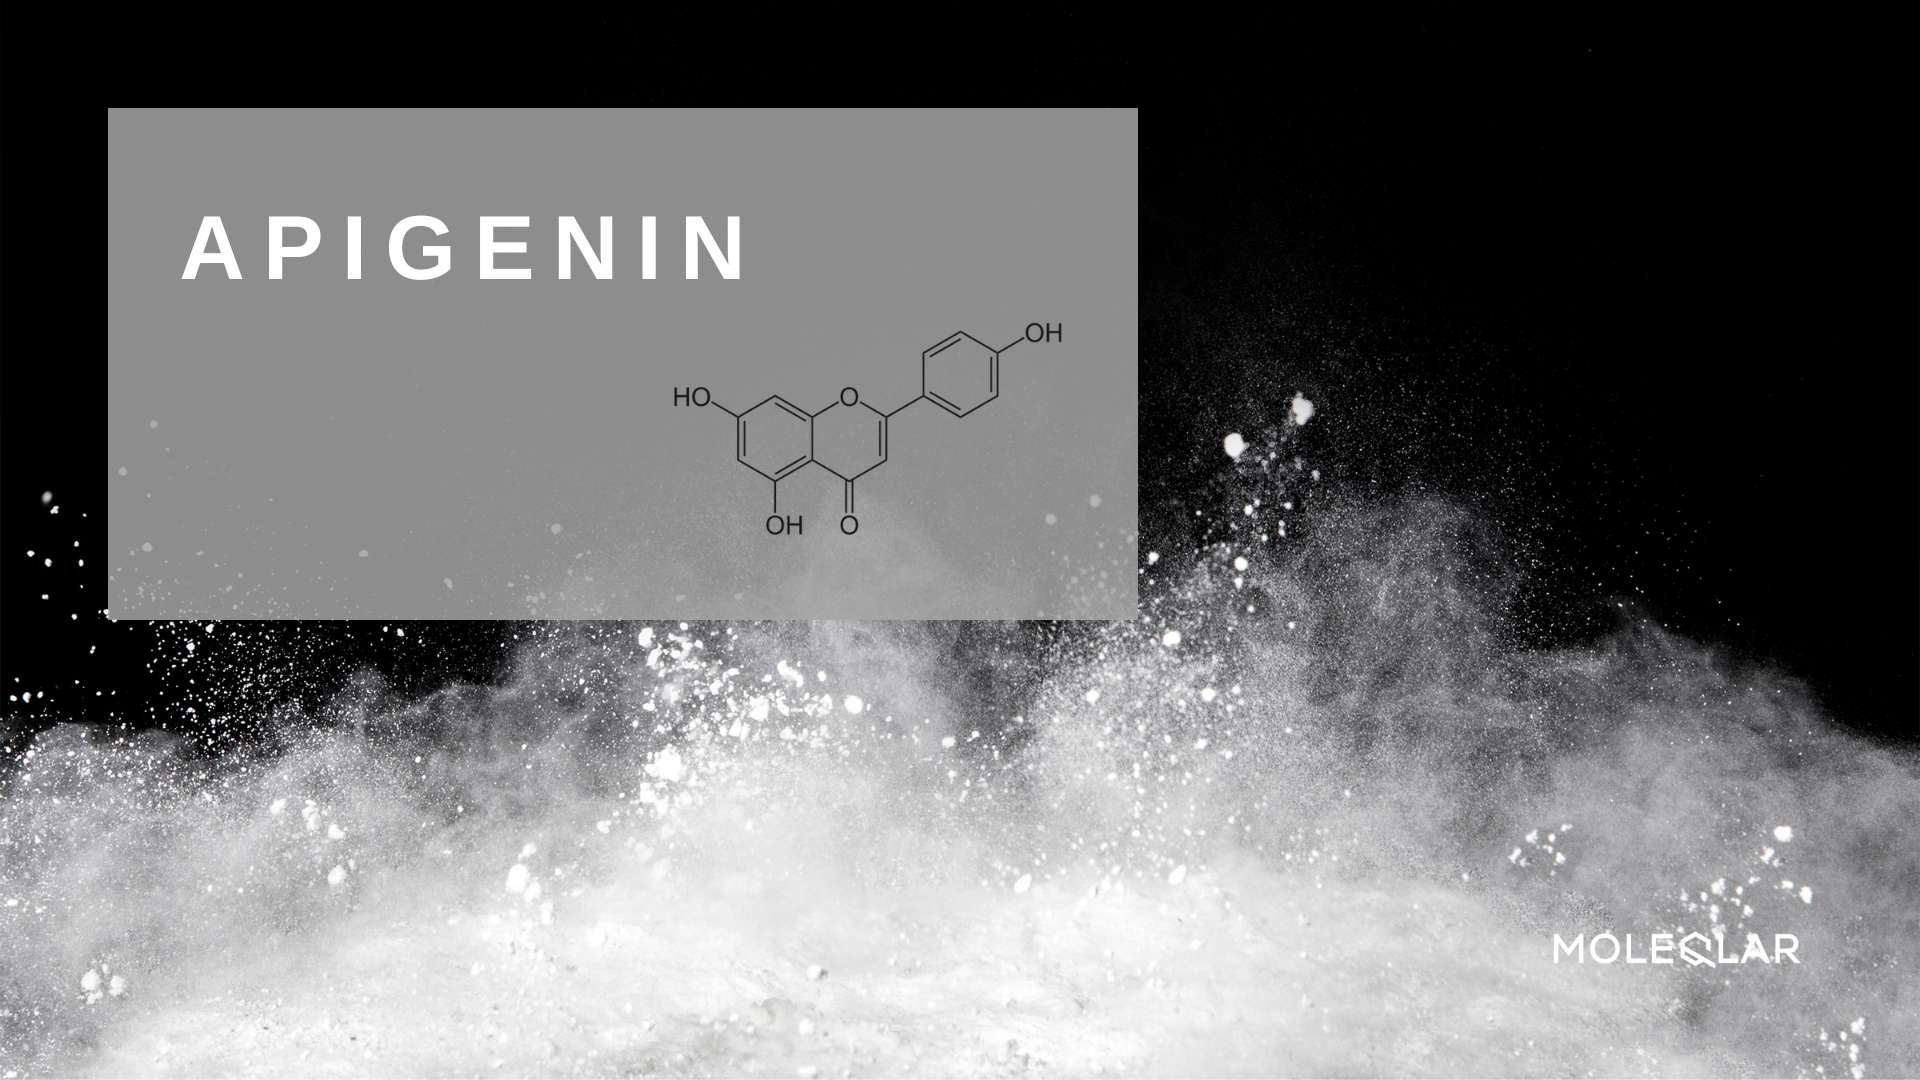 Apigenin Parsley Extract Supplement Moleqlar Longevity